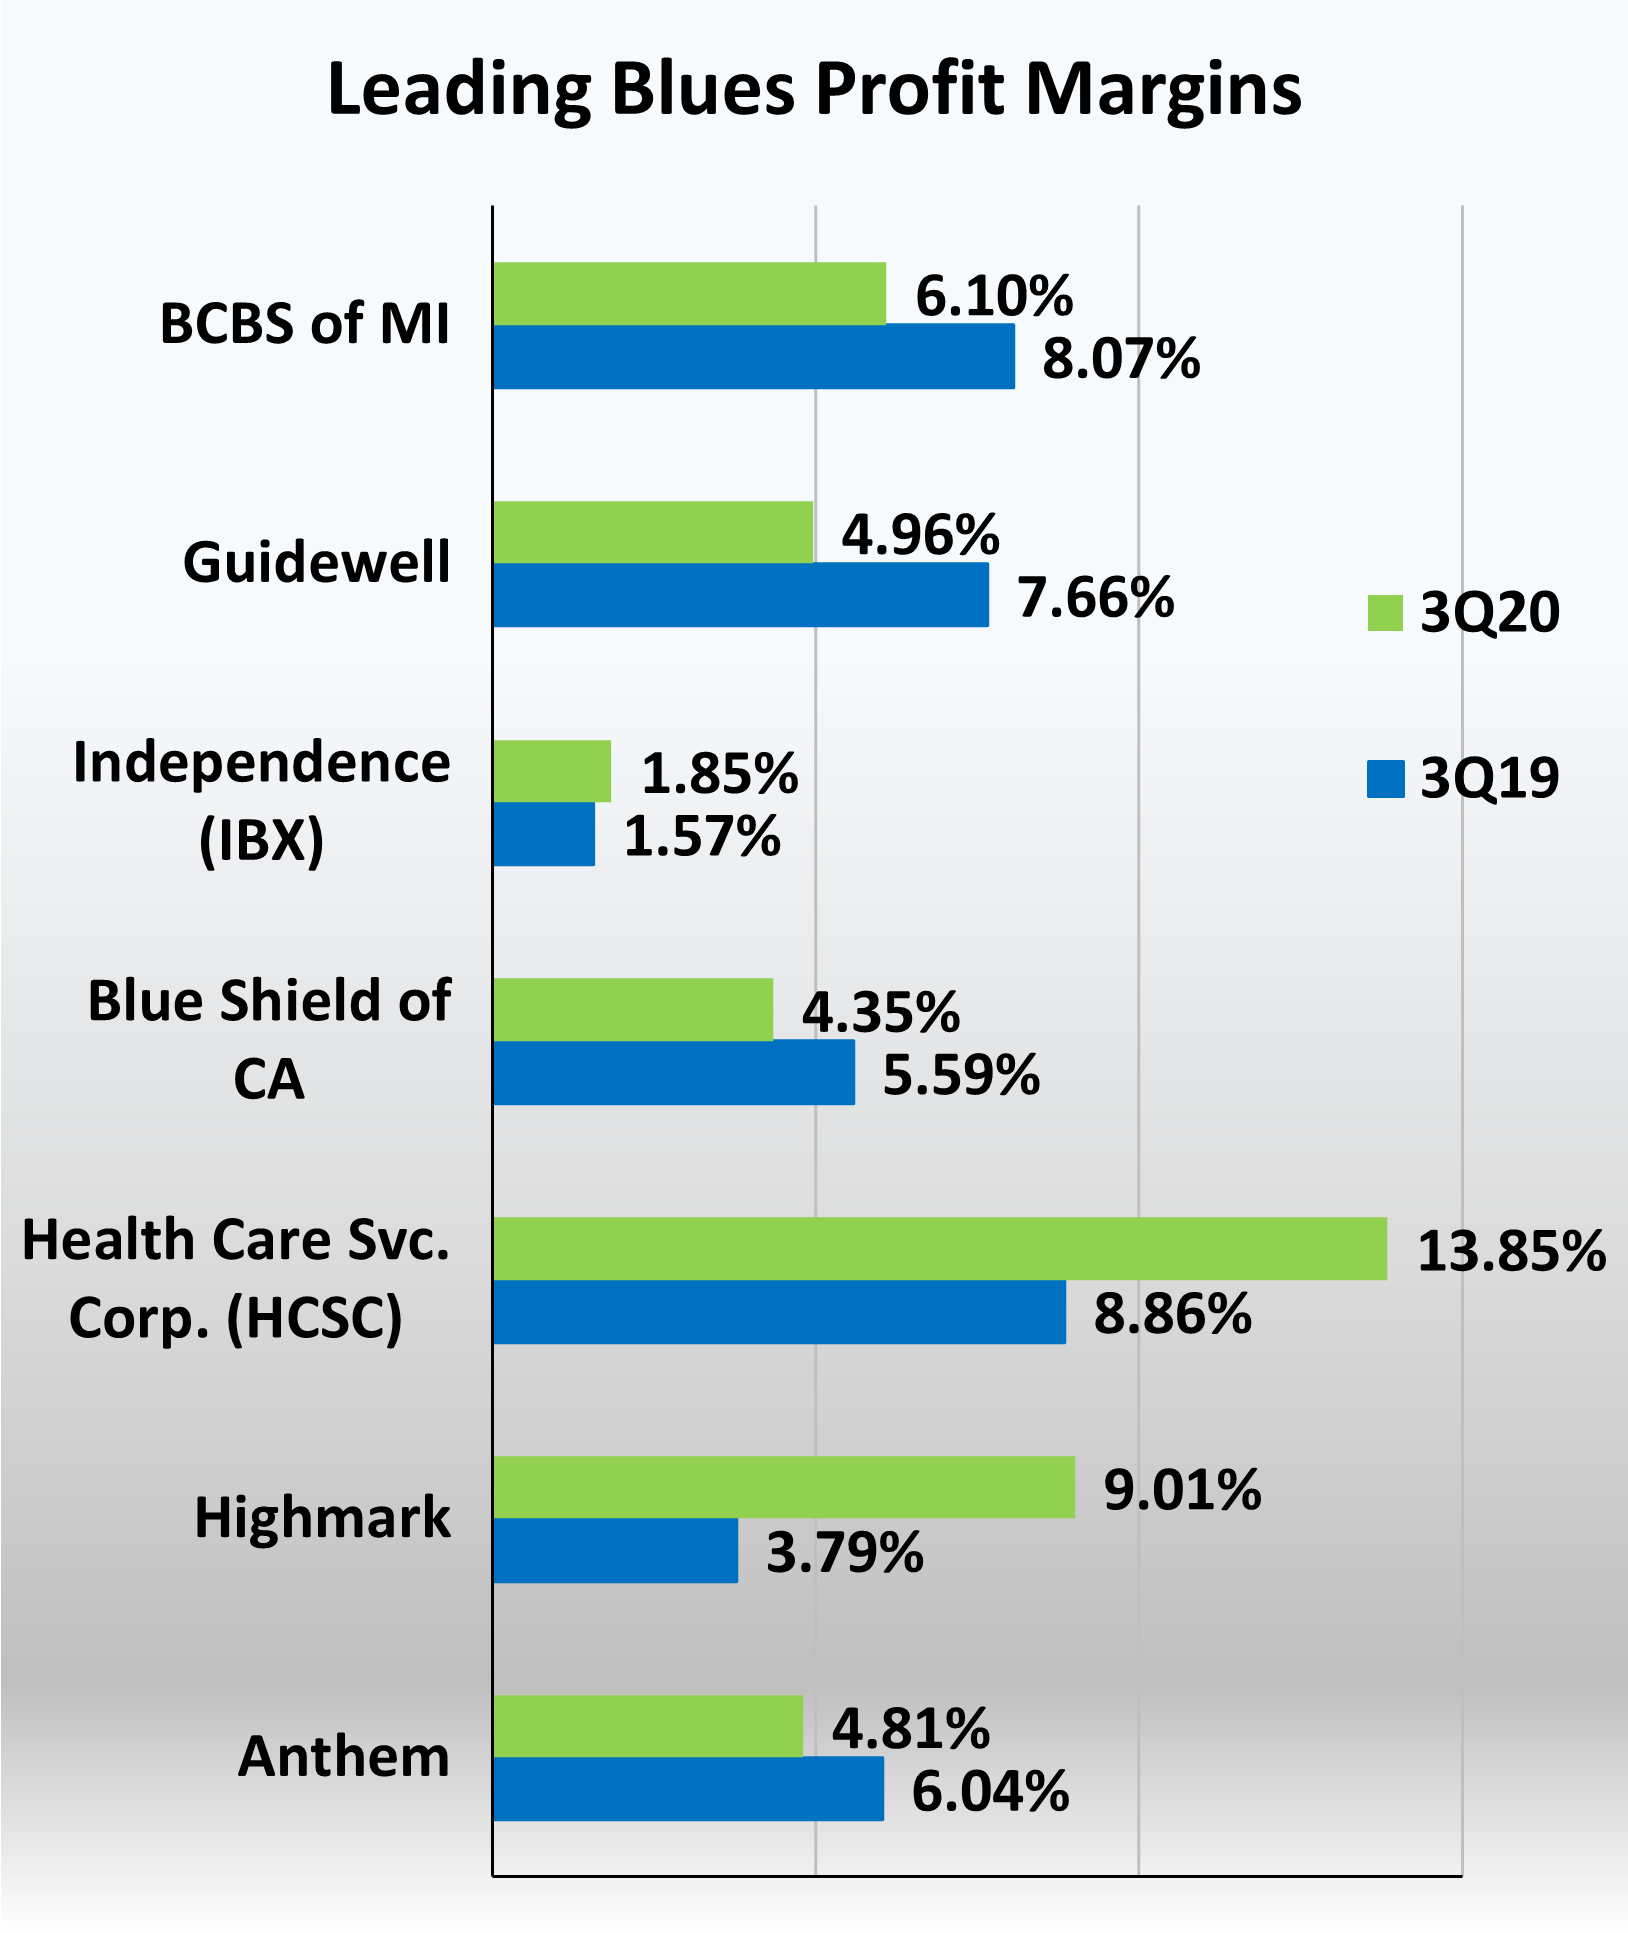 decreased-profit-margins-for-majority-of-leading-blue-cross-blue-shield